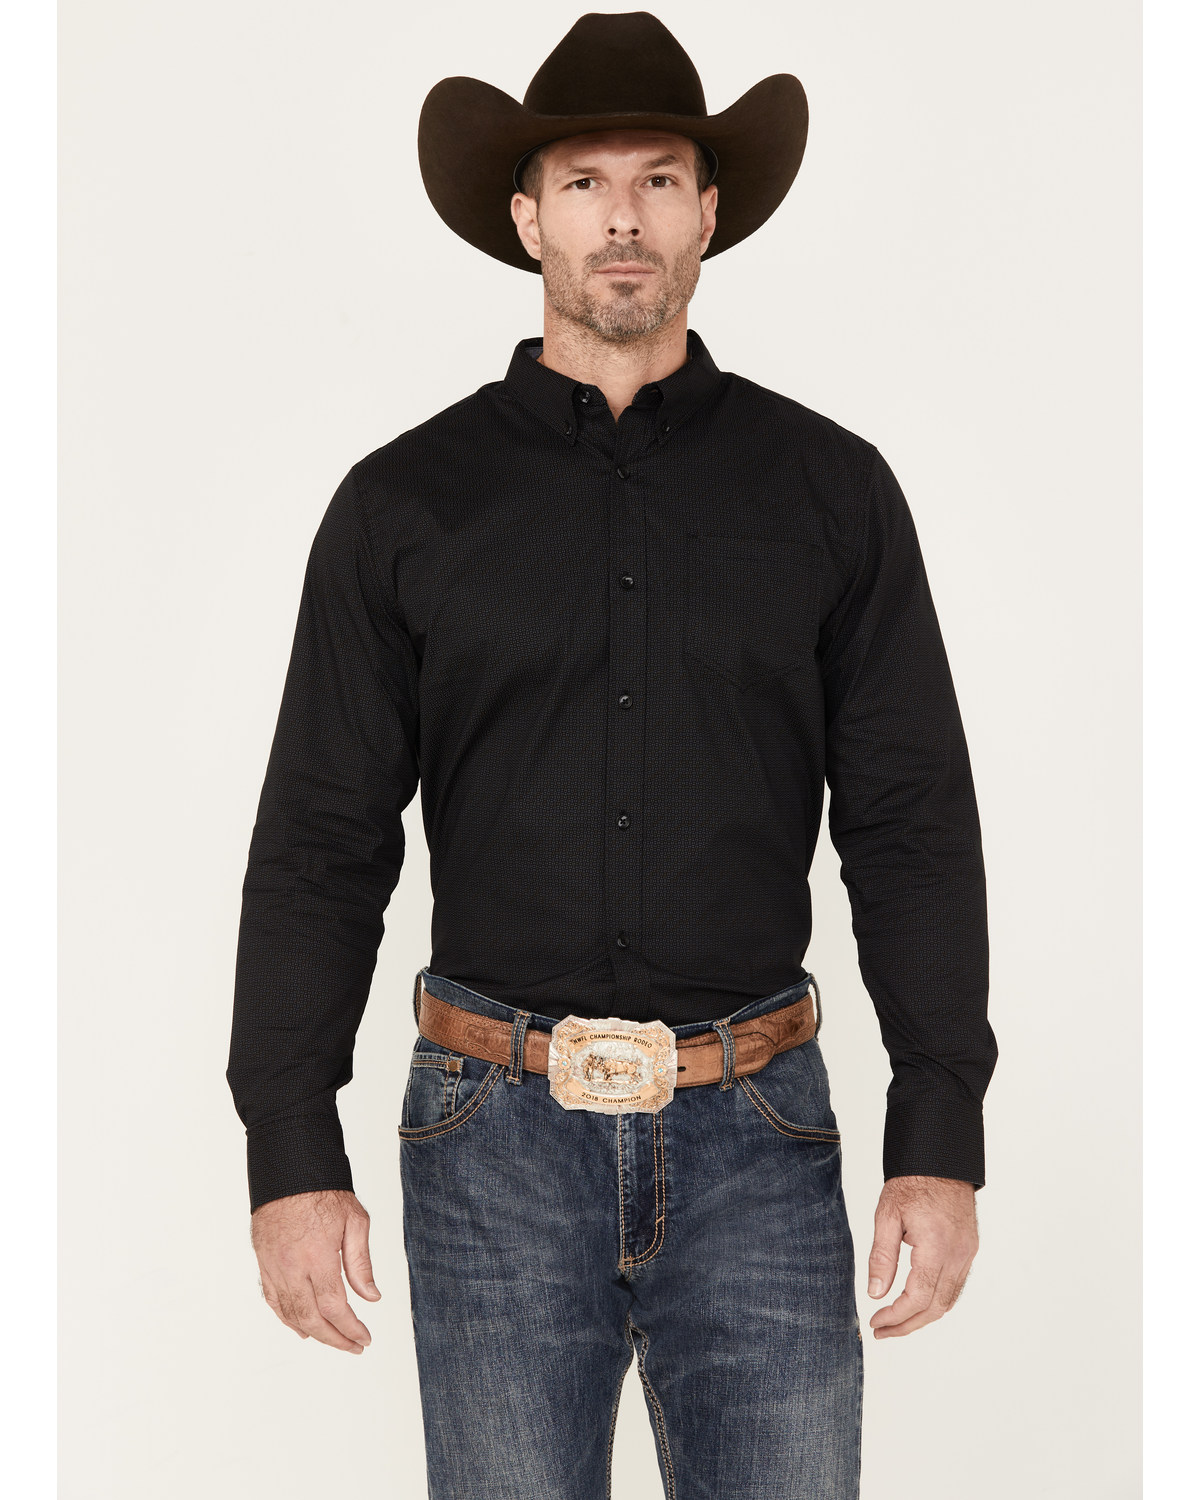 Cody James Men's Bedrock Solid Long Sleeve Stretch Button Down Western Shirt - Big & Tall